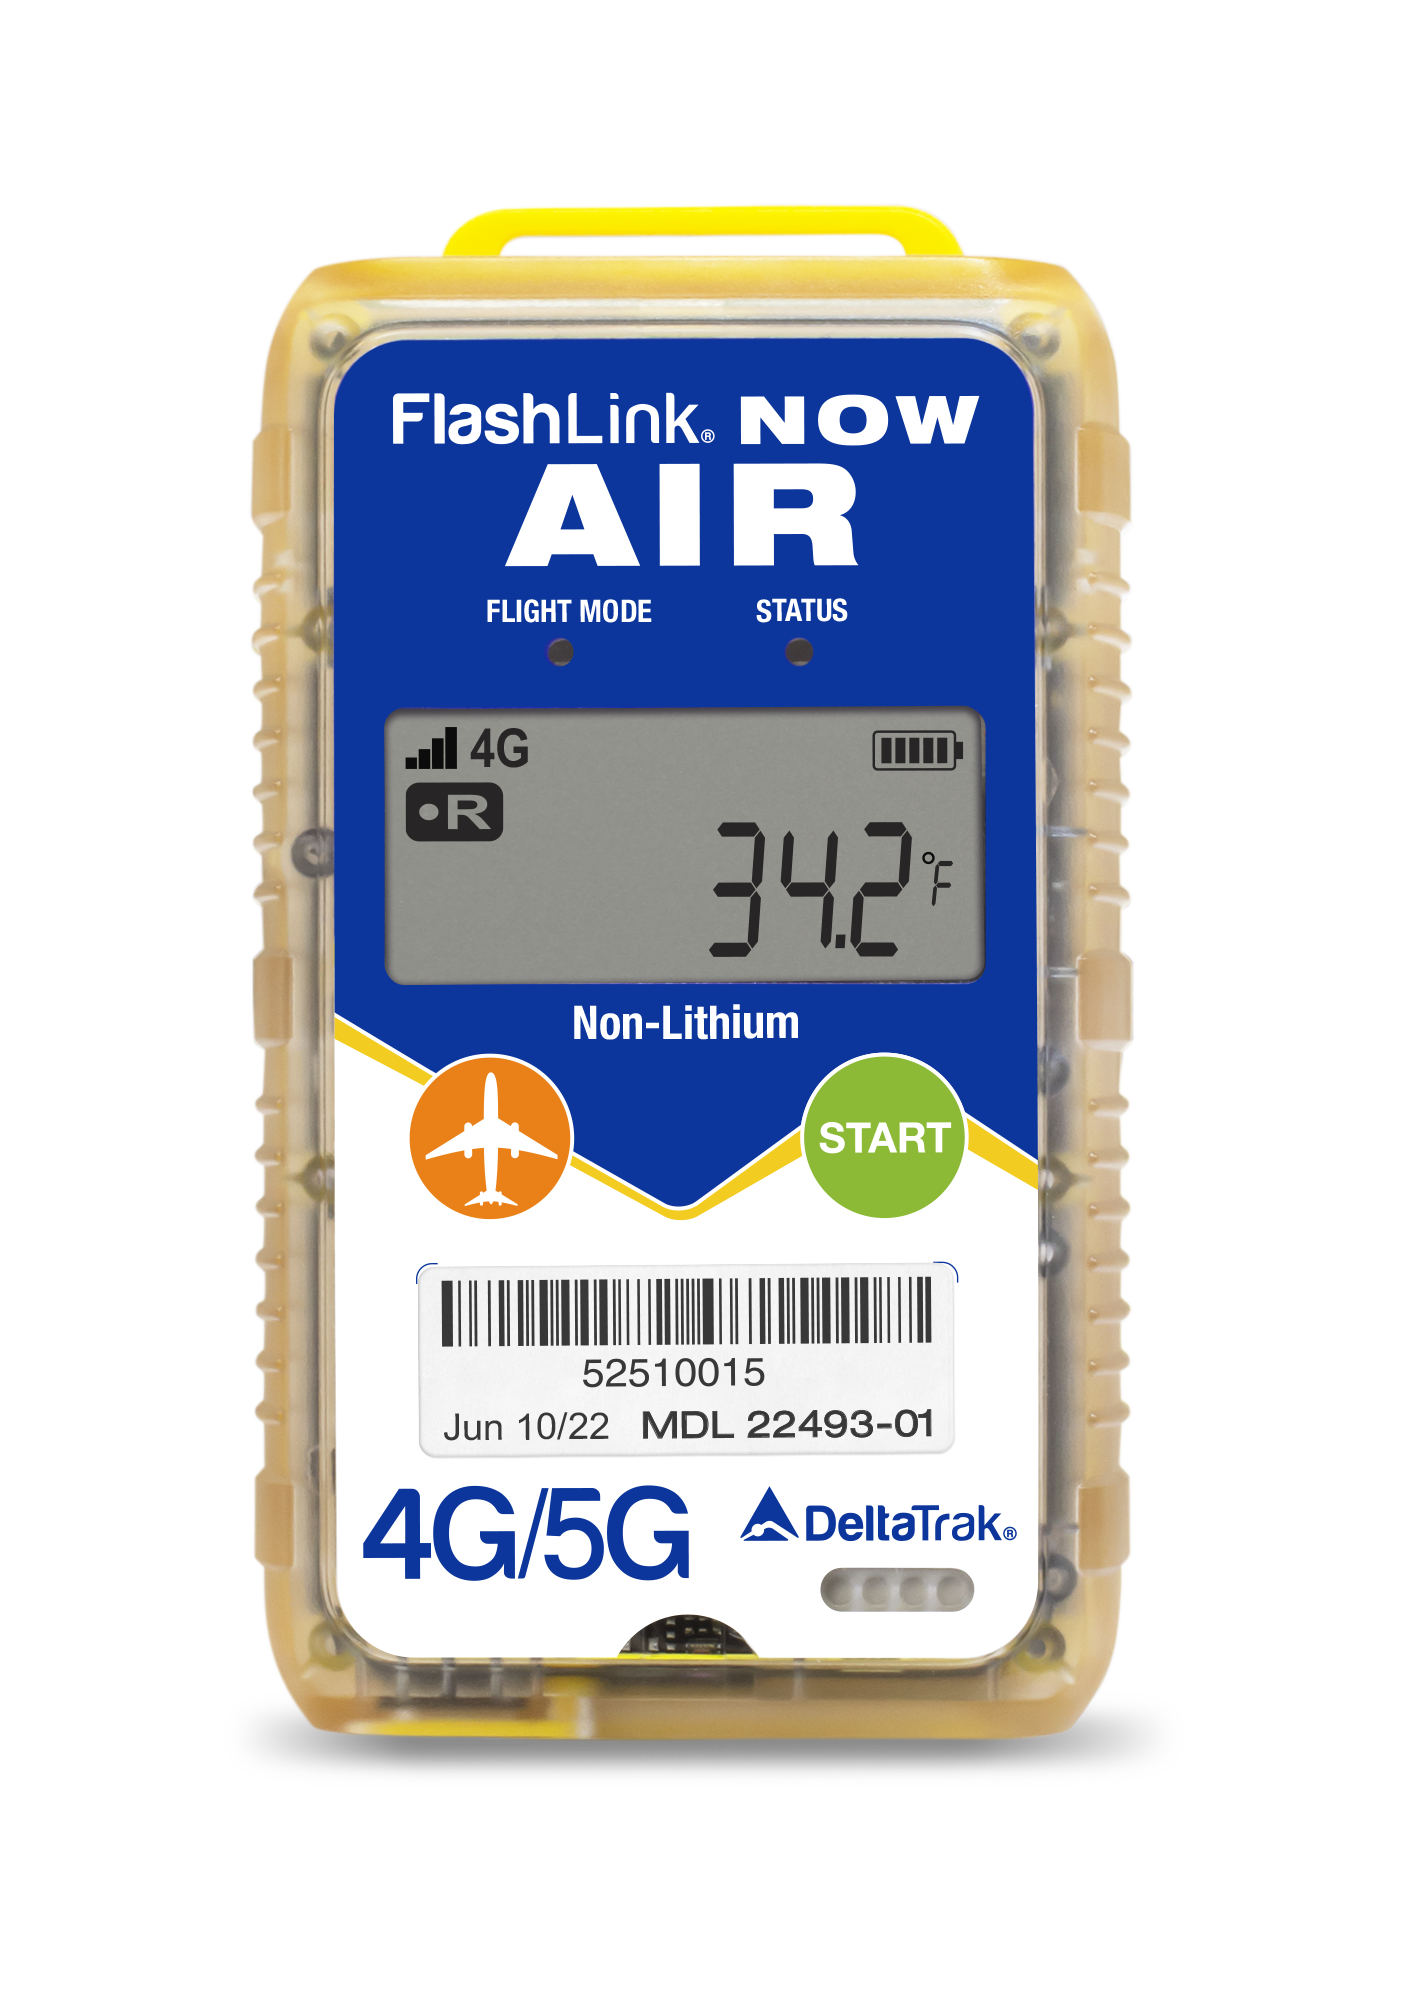 FlashLink® NOW AIR 4G/5G Real-Time In-Transit Logger, Model 22493-01